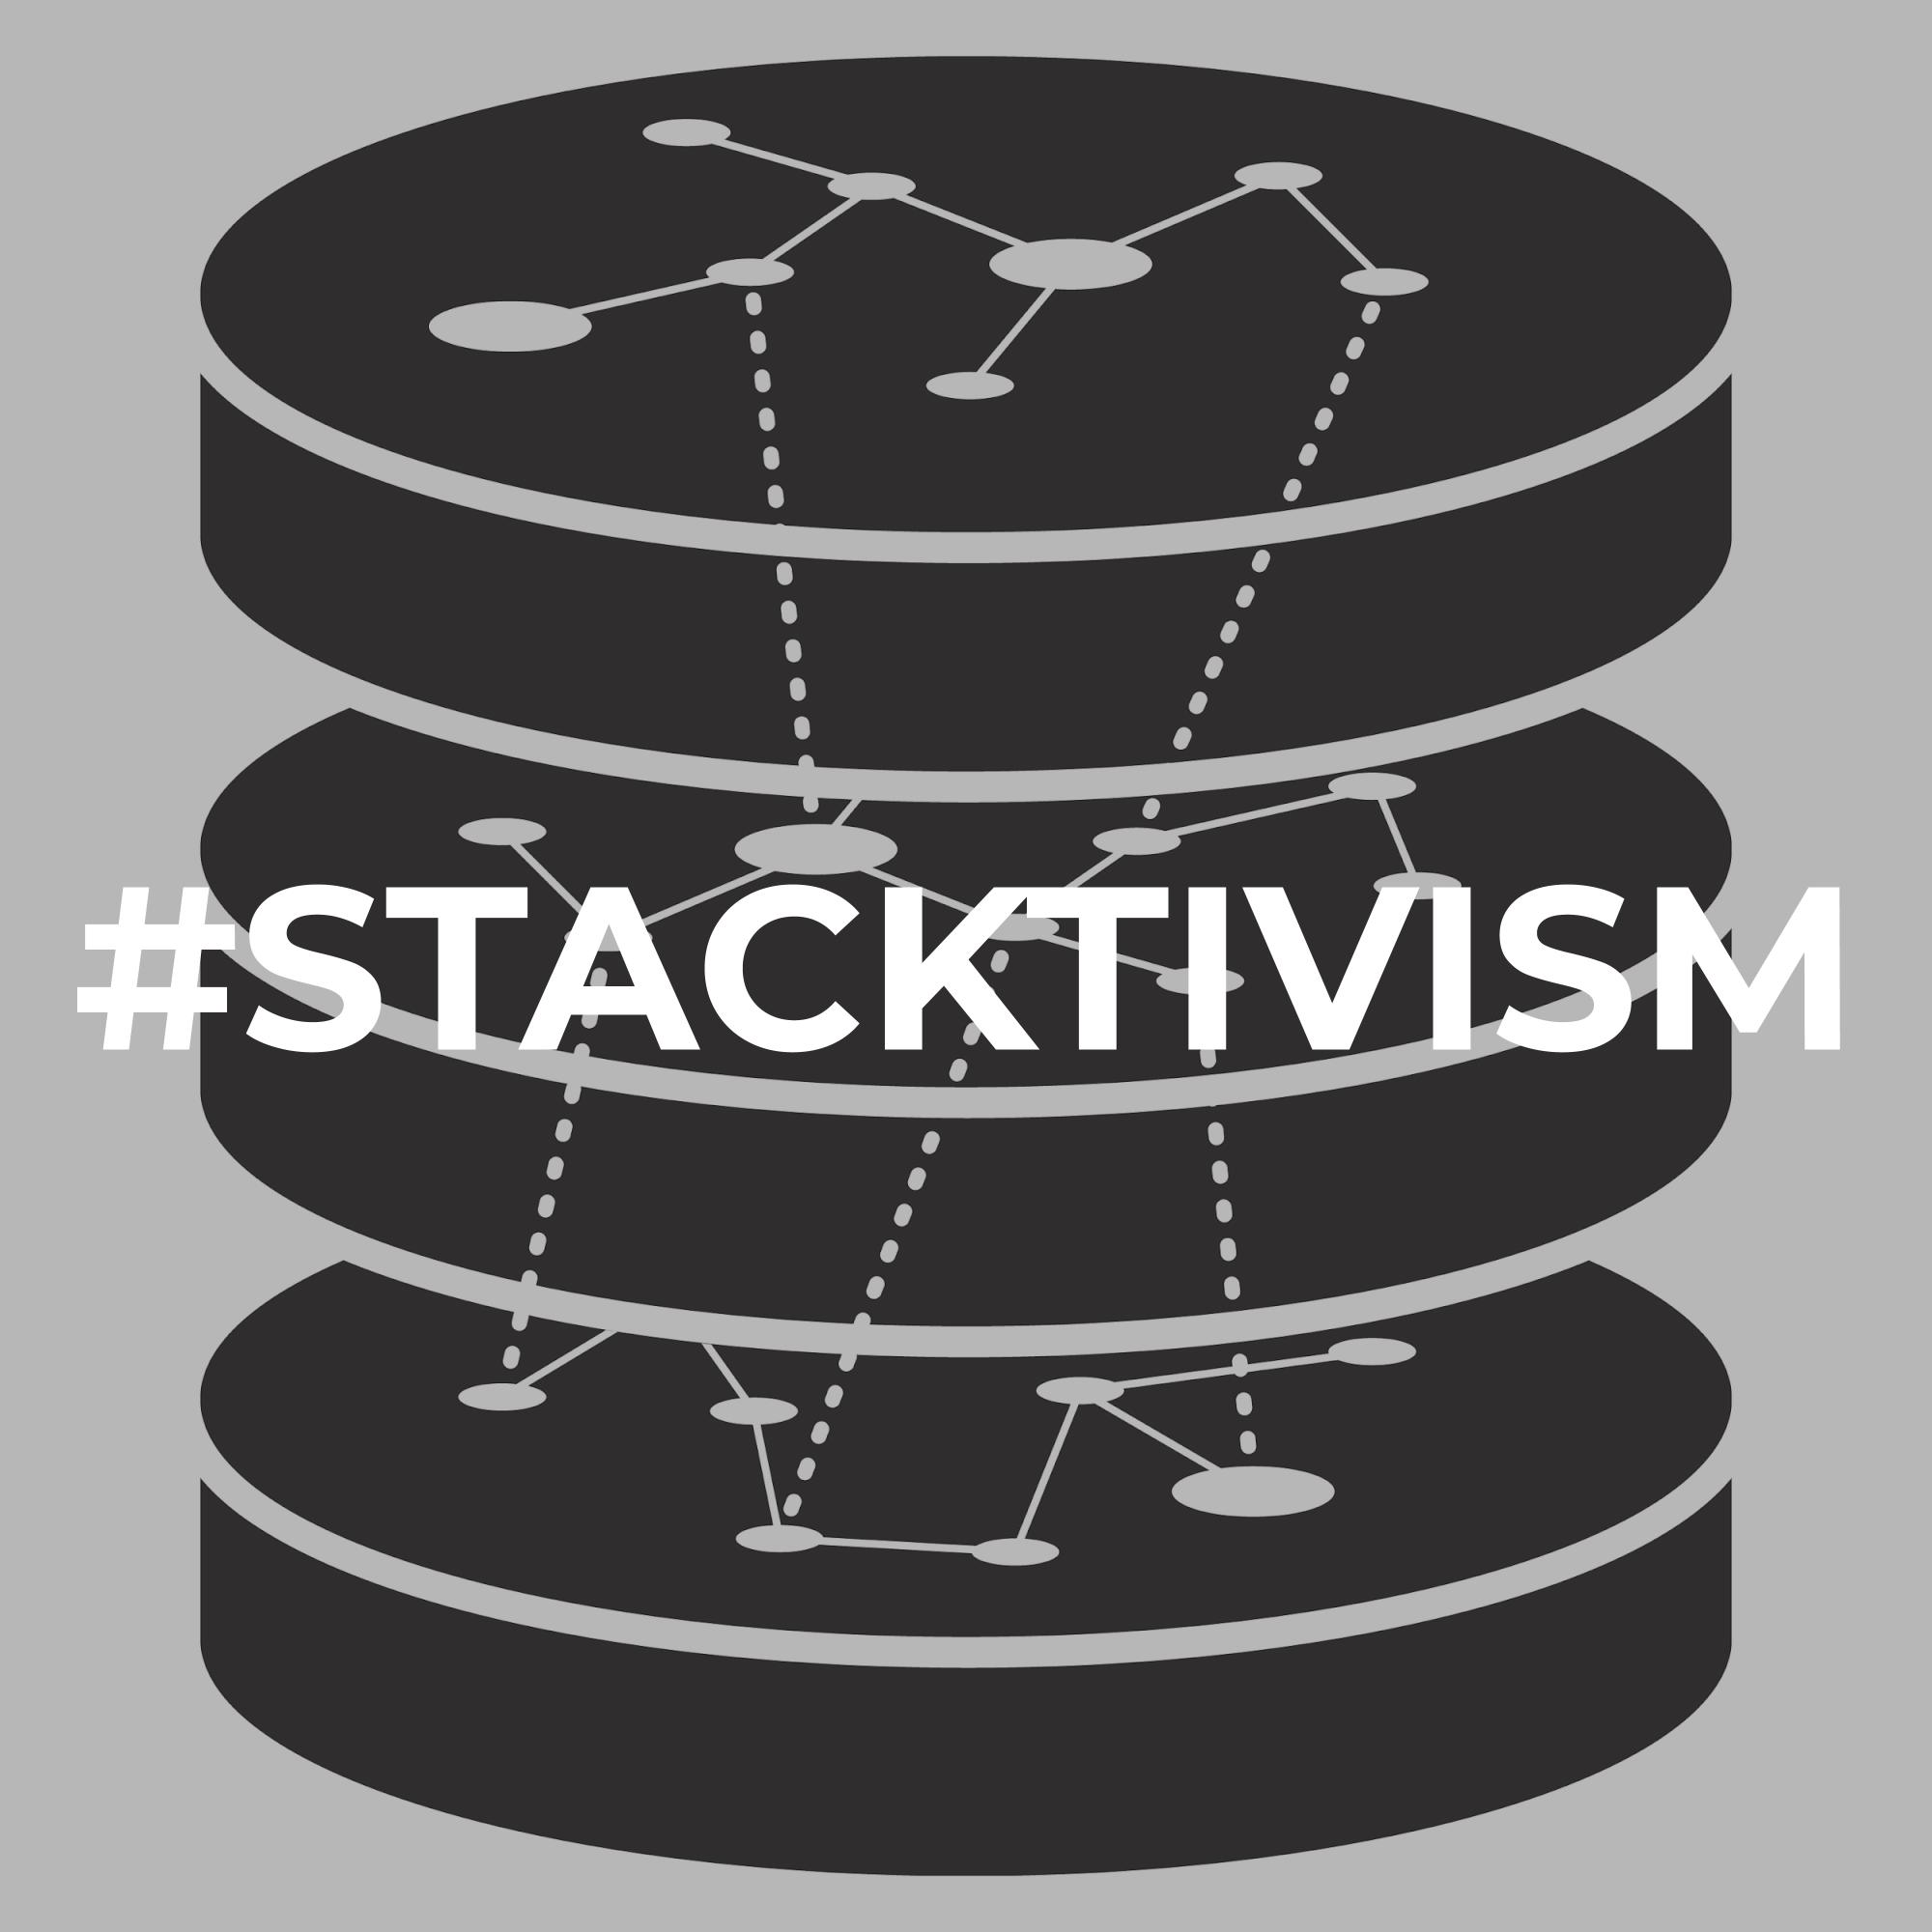 #Stacktivism